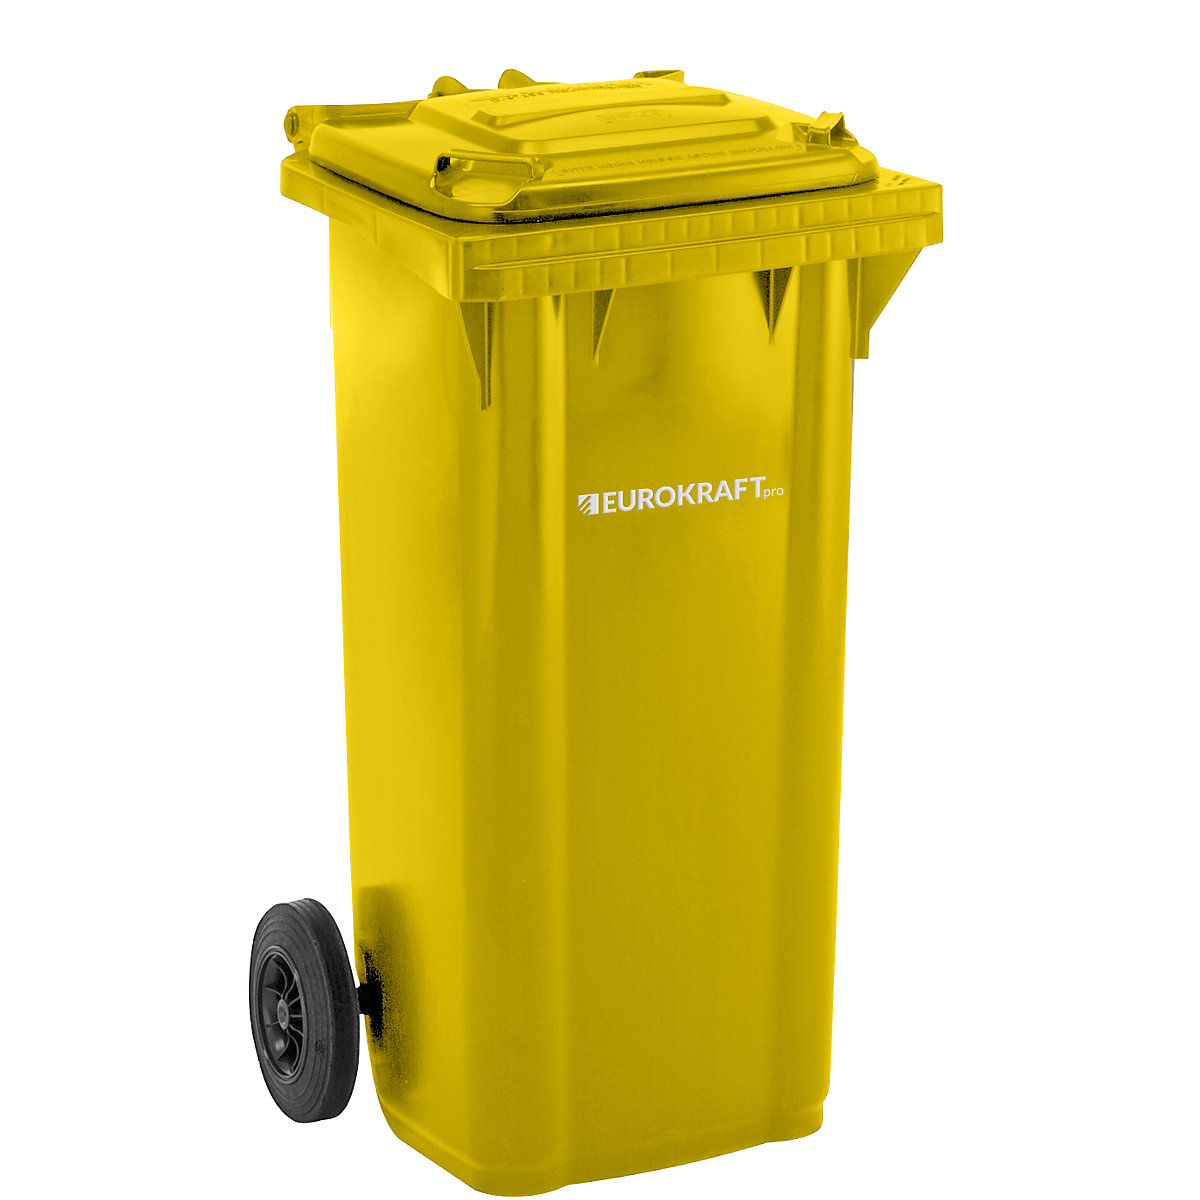 Kanta za smeće od plastike DIN EN 840 – eurokraft pro, volumen 120 l, ŠxVxD 505 x 1005 x 555 mm, u žutoj boji-6